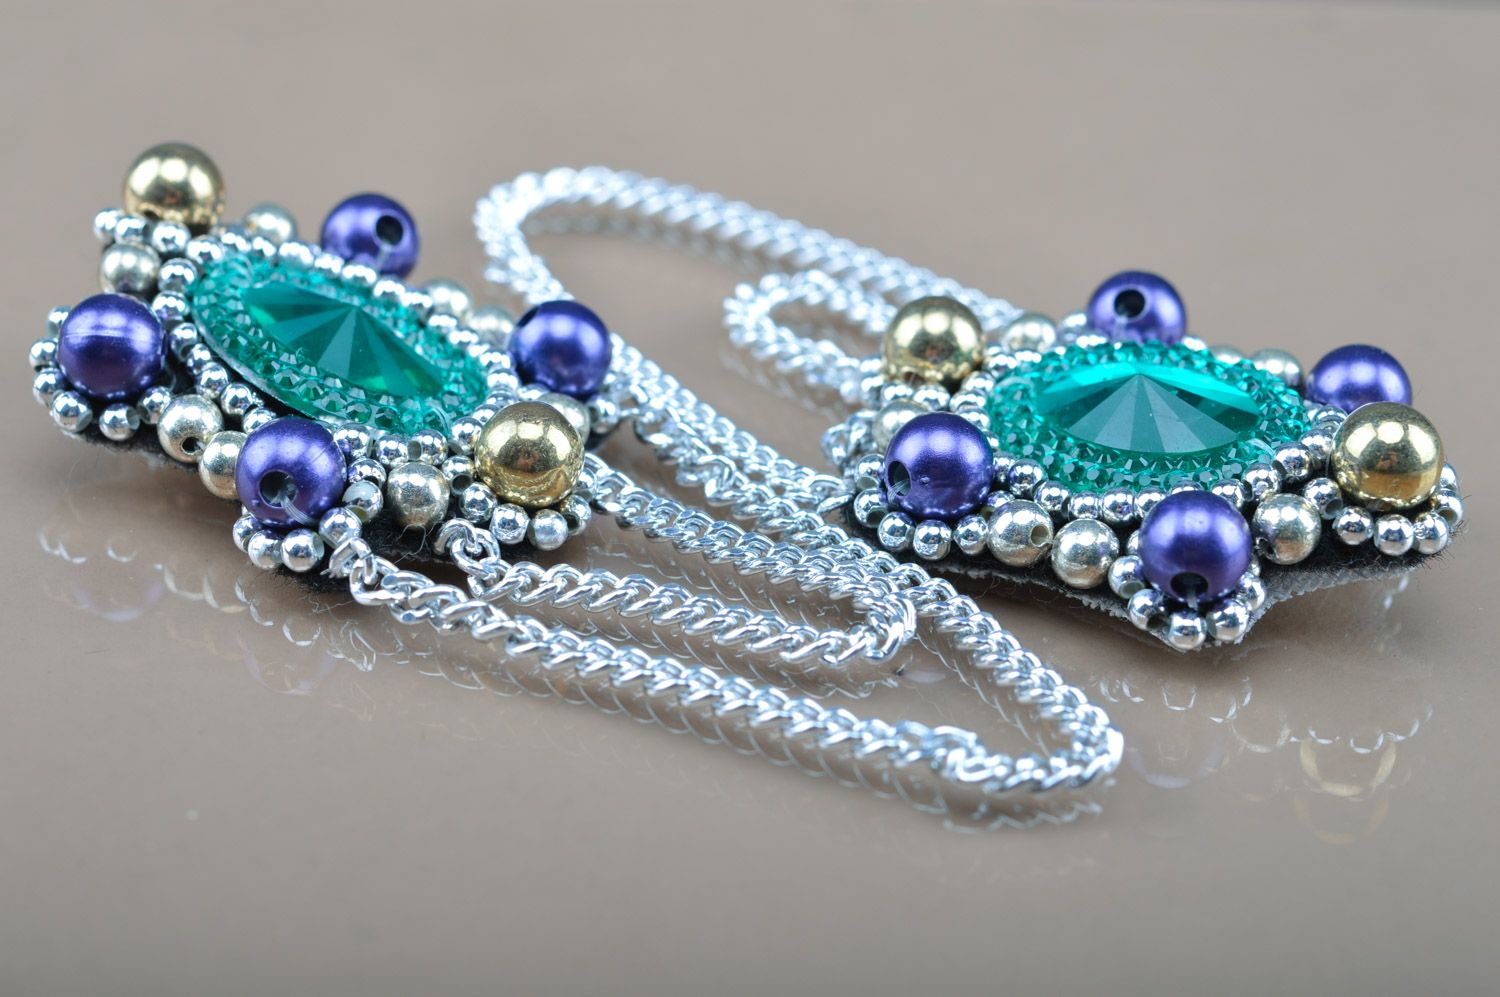 Handmade festive beaded earrings with rhinestones and chains on felt basis photo 2